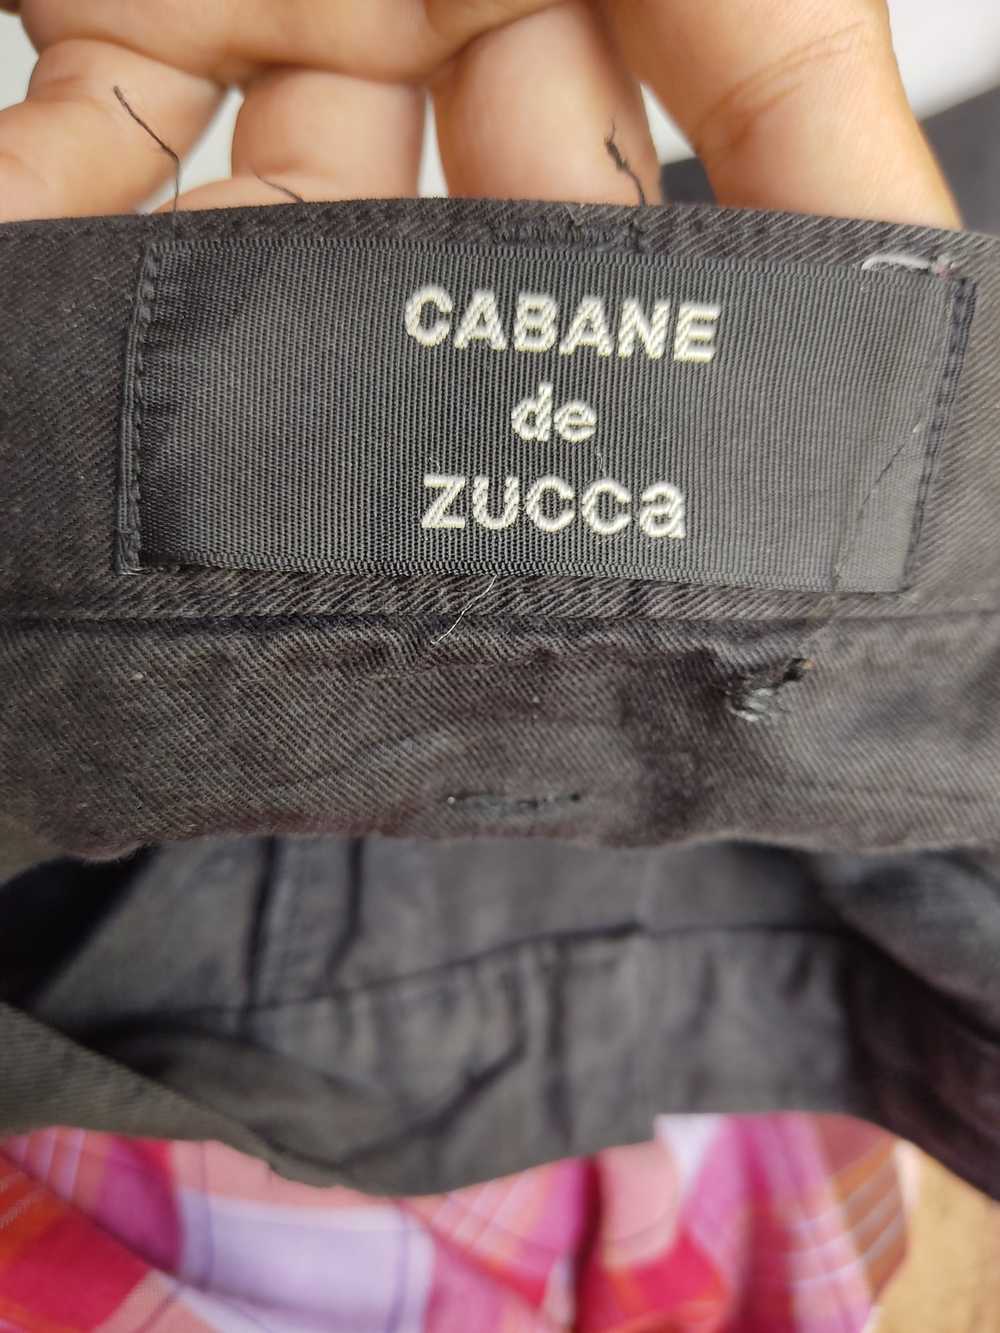 Cabane De Zucca Cabane zucca zipper pocket - image 4